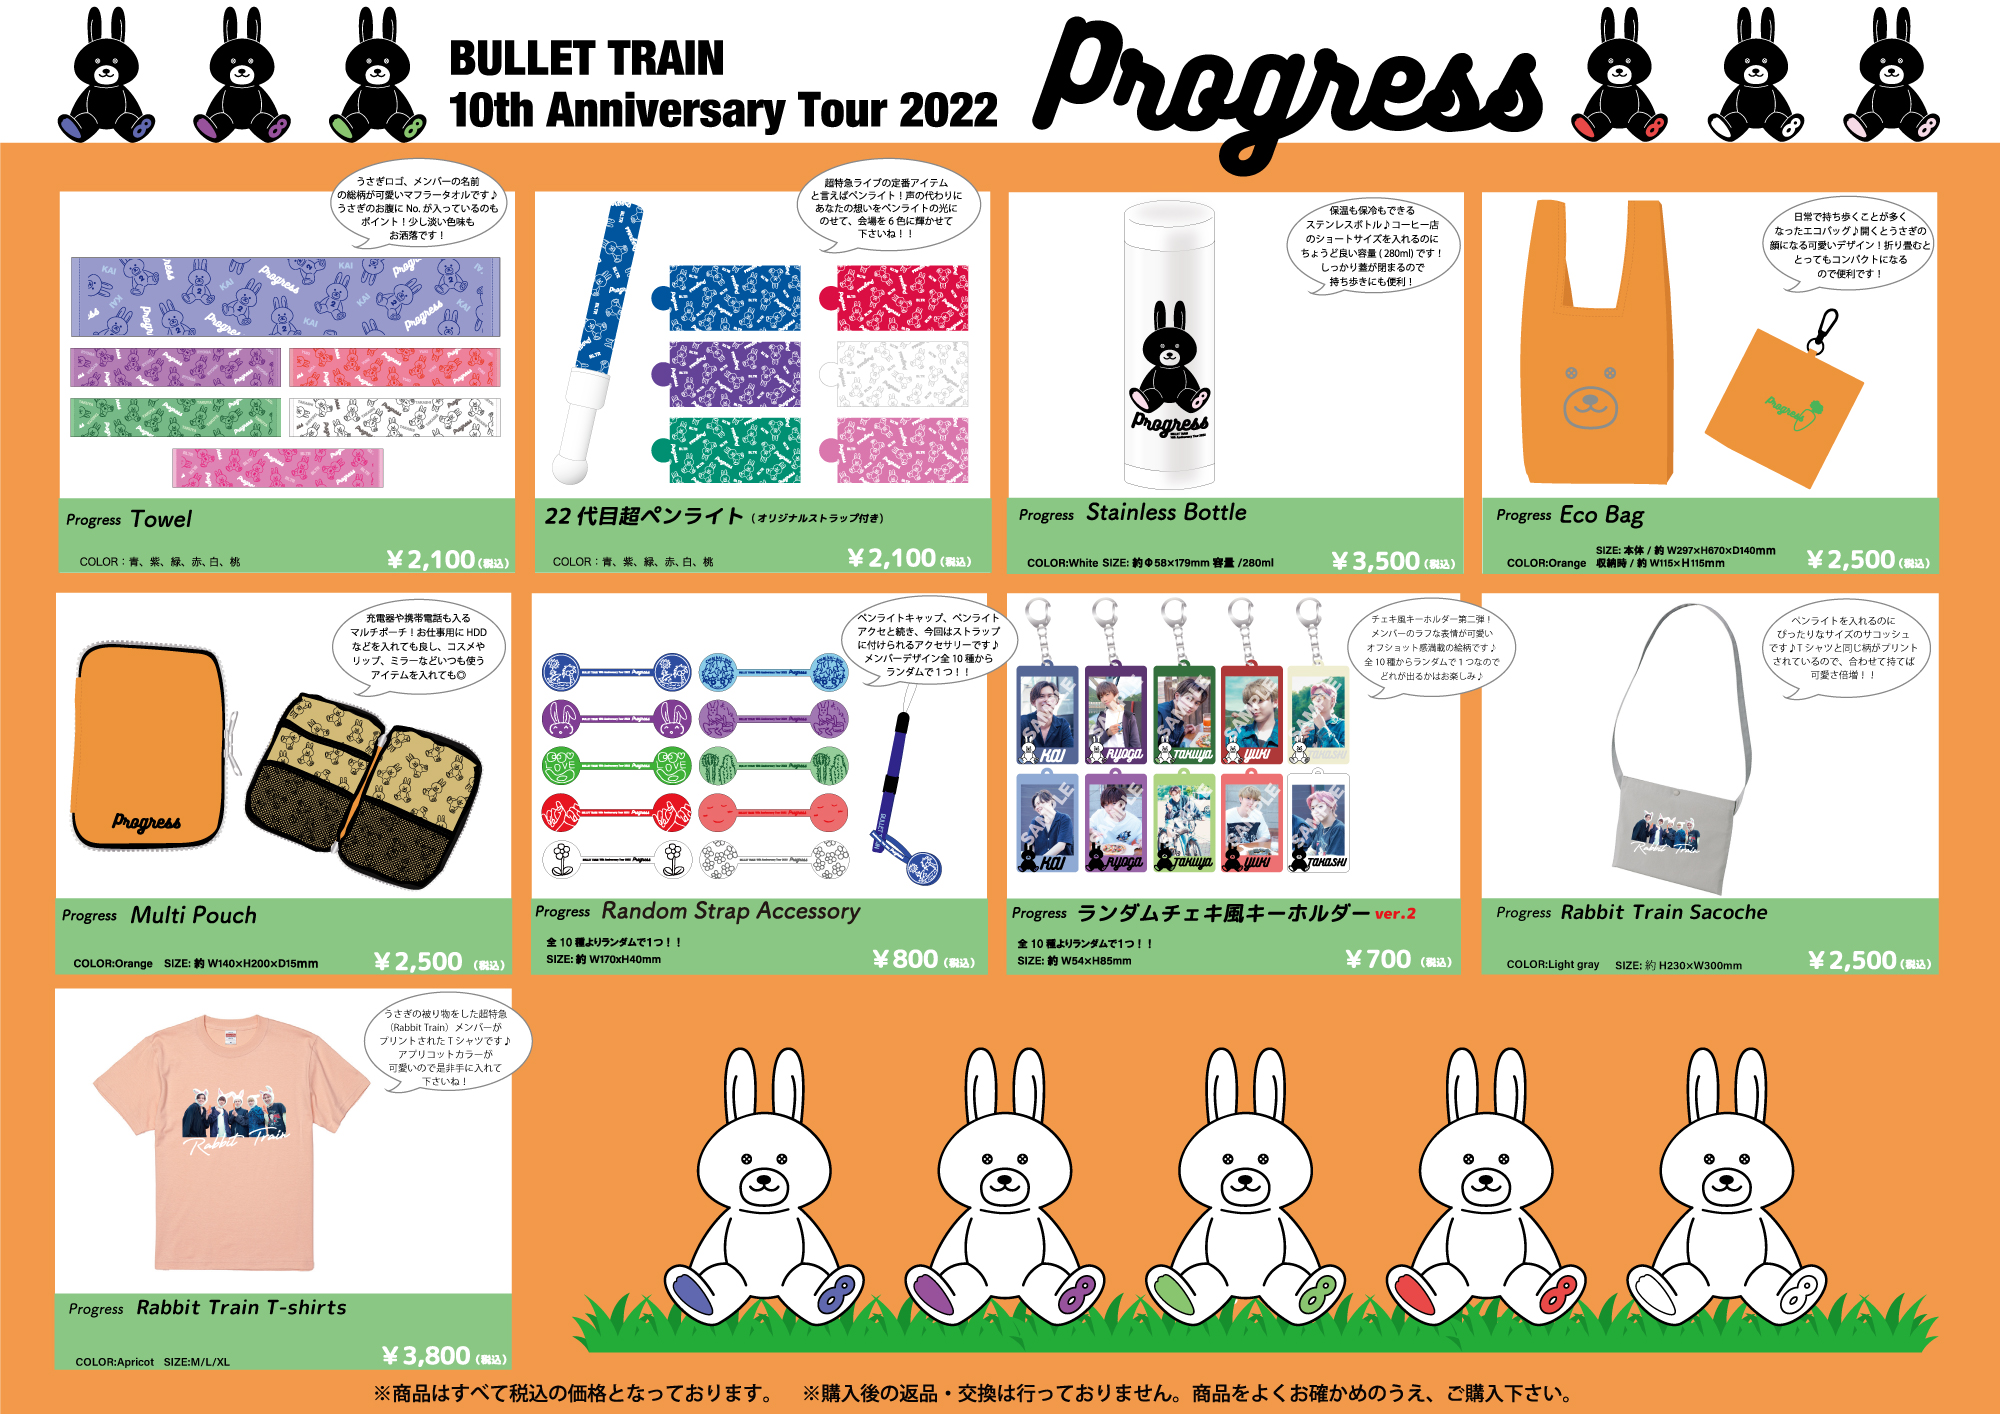 BULLET TRAIN 10th Anniversary Tour 2022「Progress」オフィシャル 